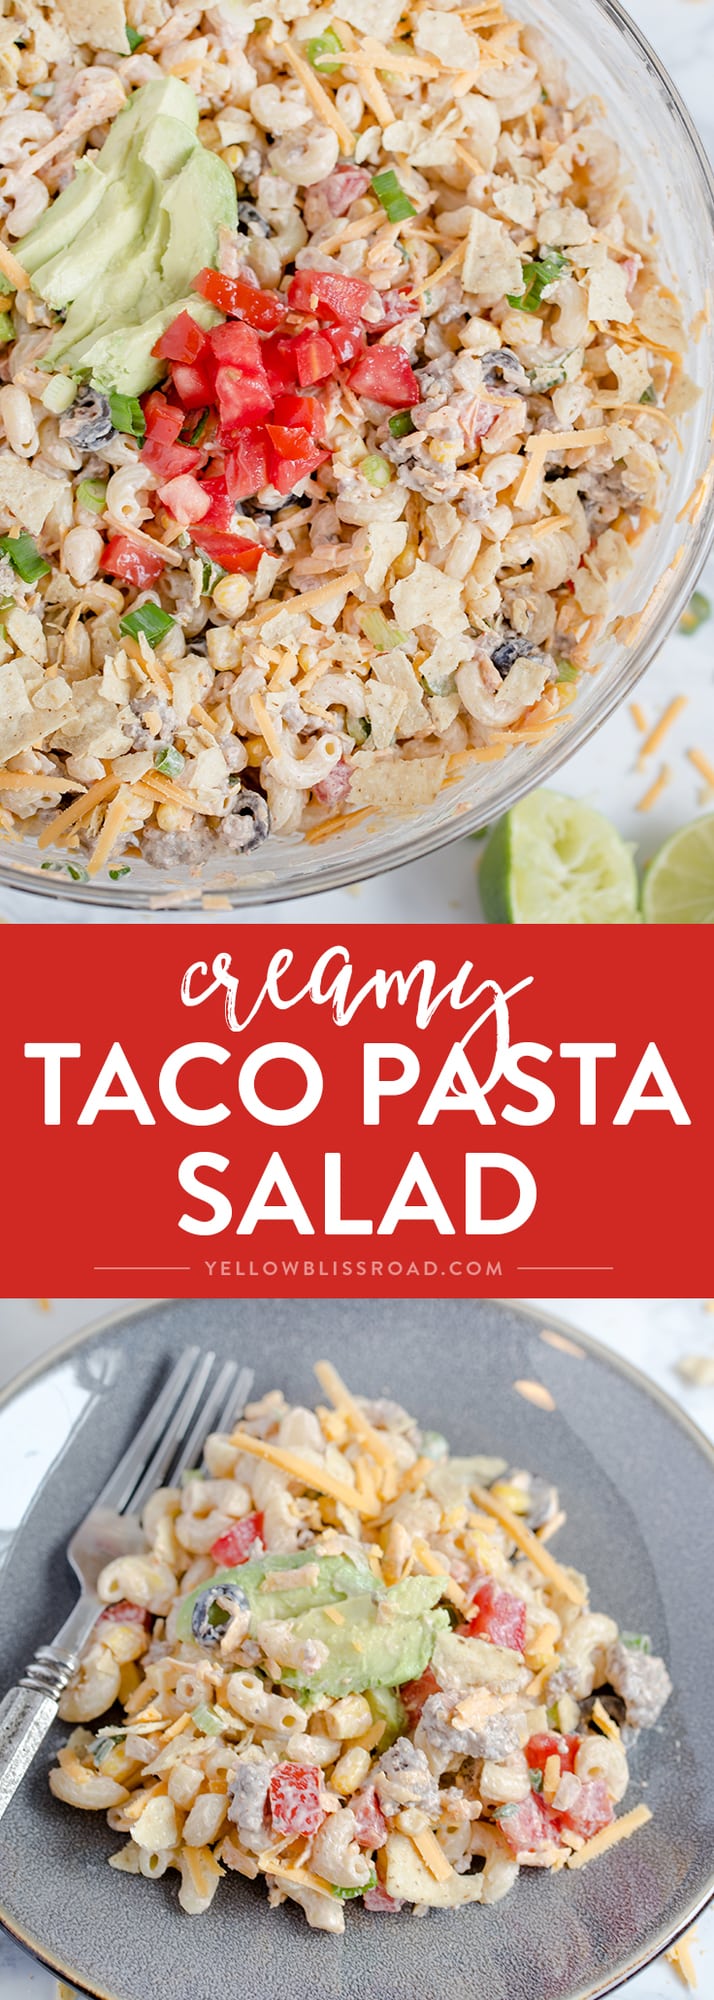 Social media image for Creamy Taco Pasta Salad